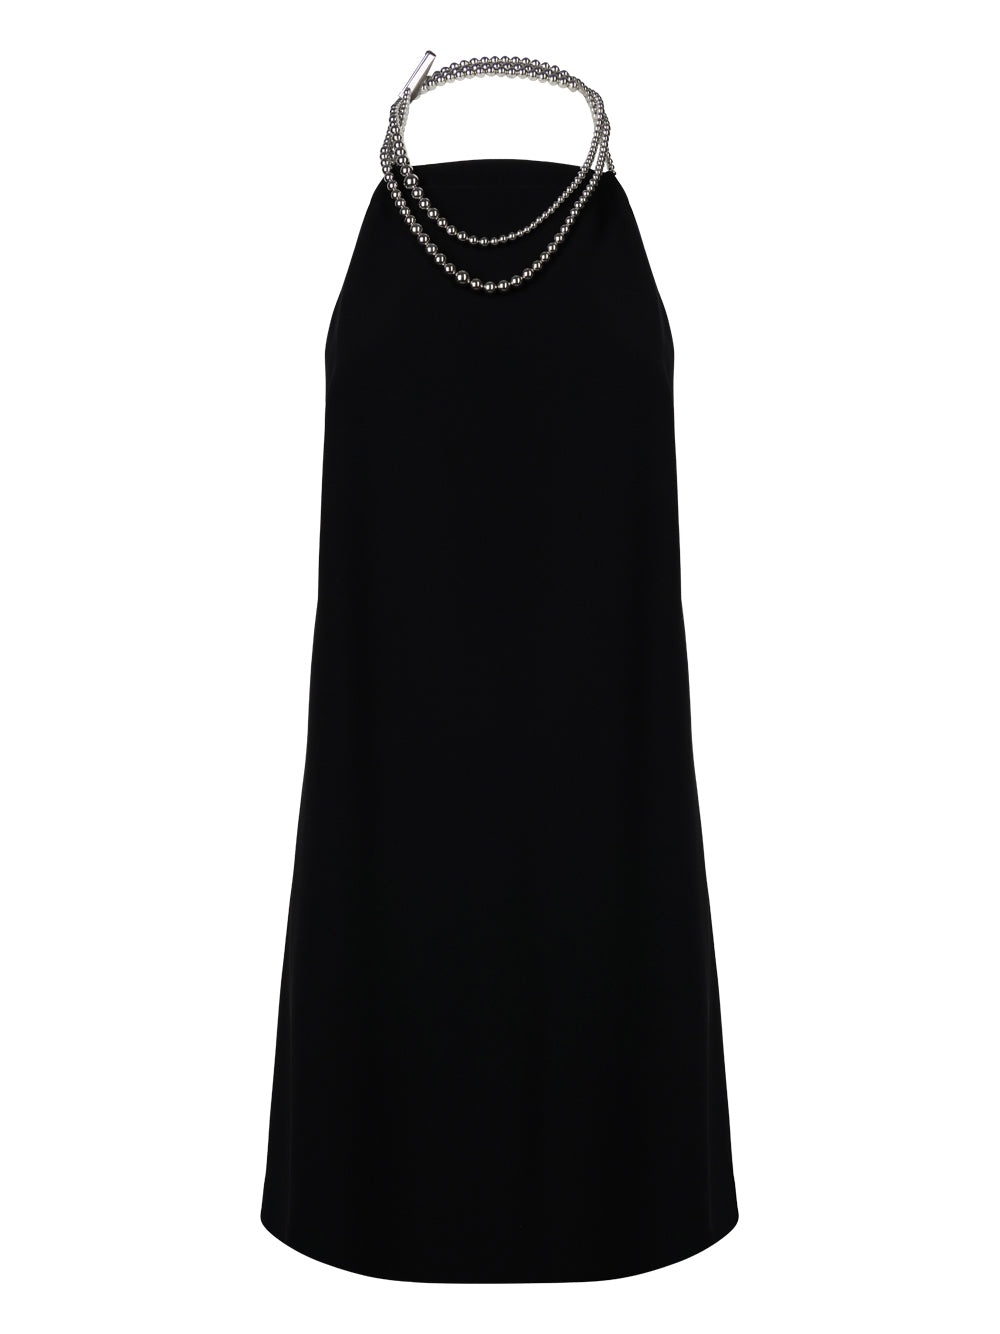 PRADA BLACK SUIT DRESS - 1